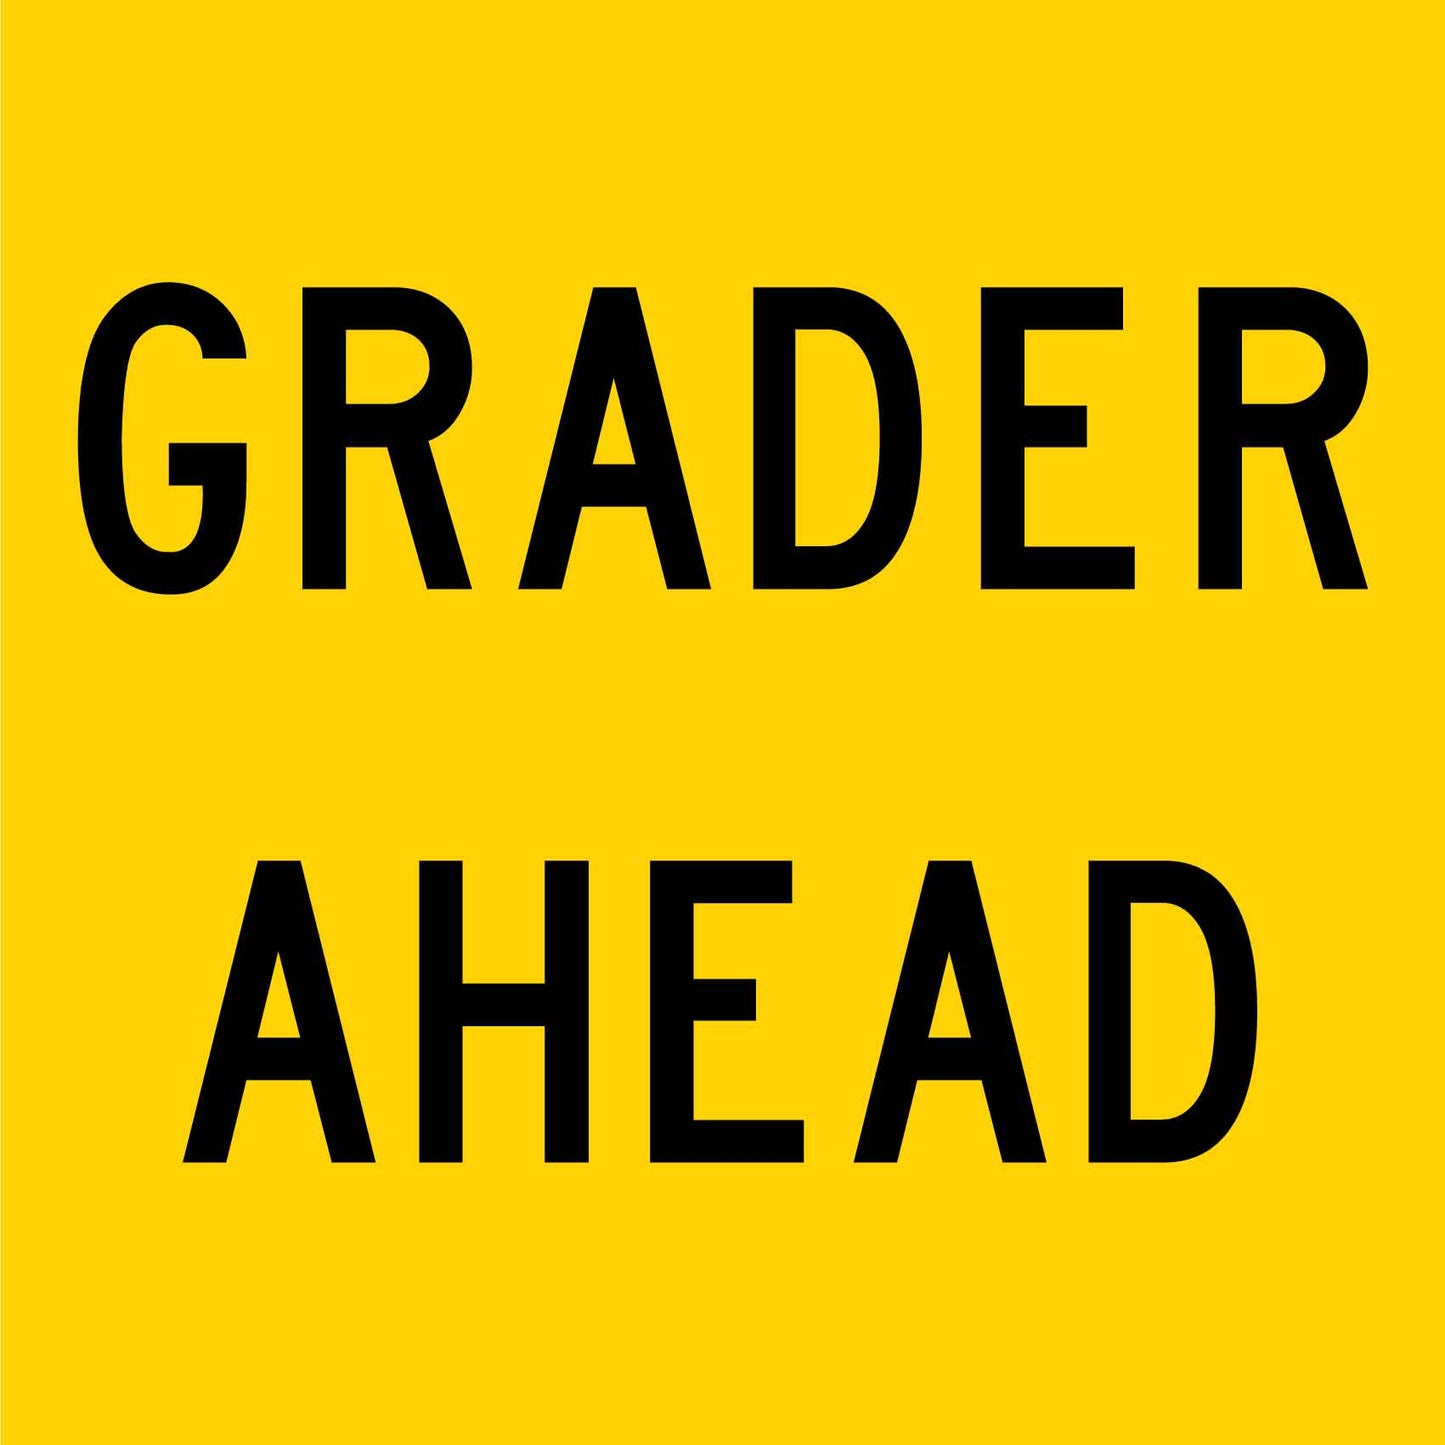 Grader Ahead Multi Message Reflective Traffic Sign